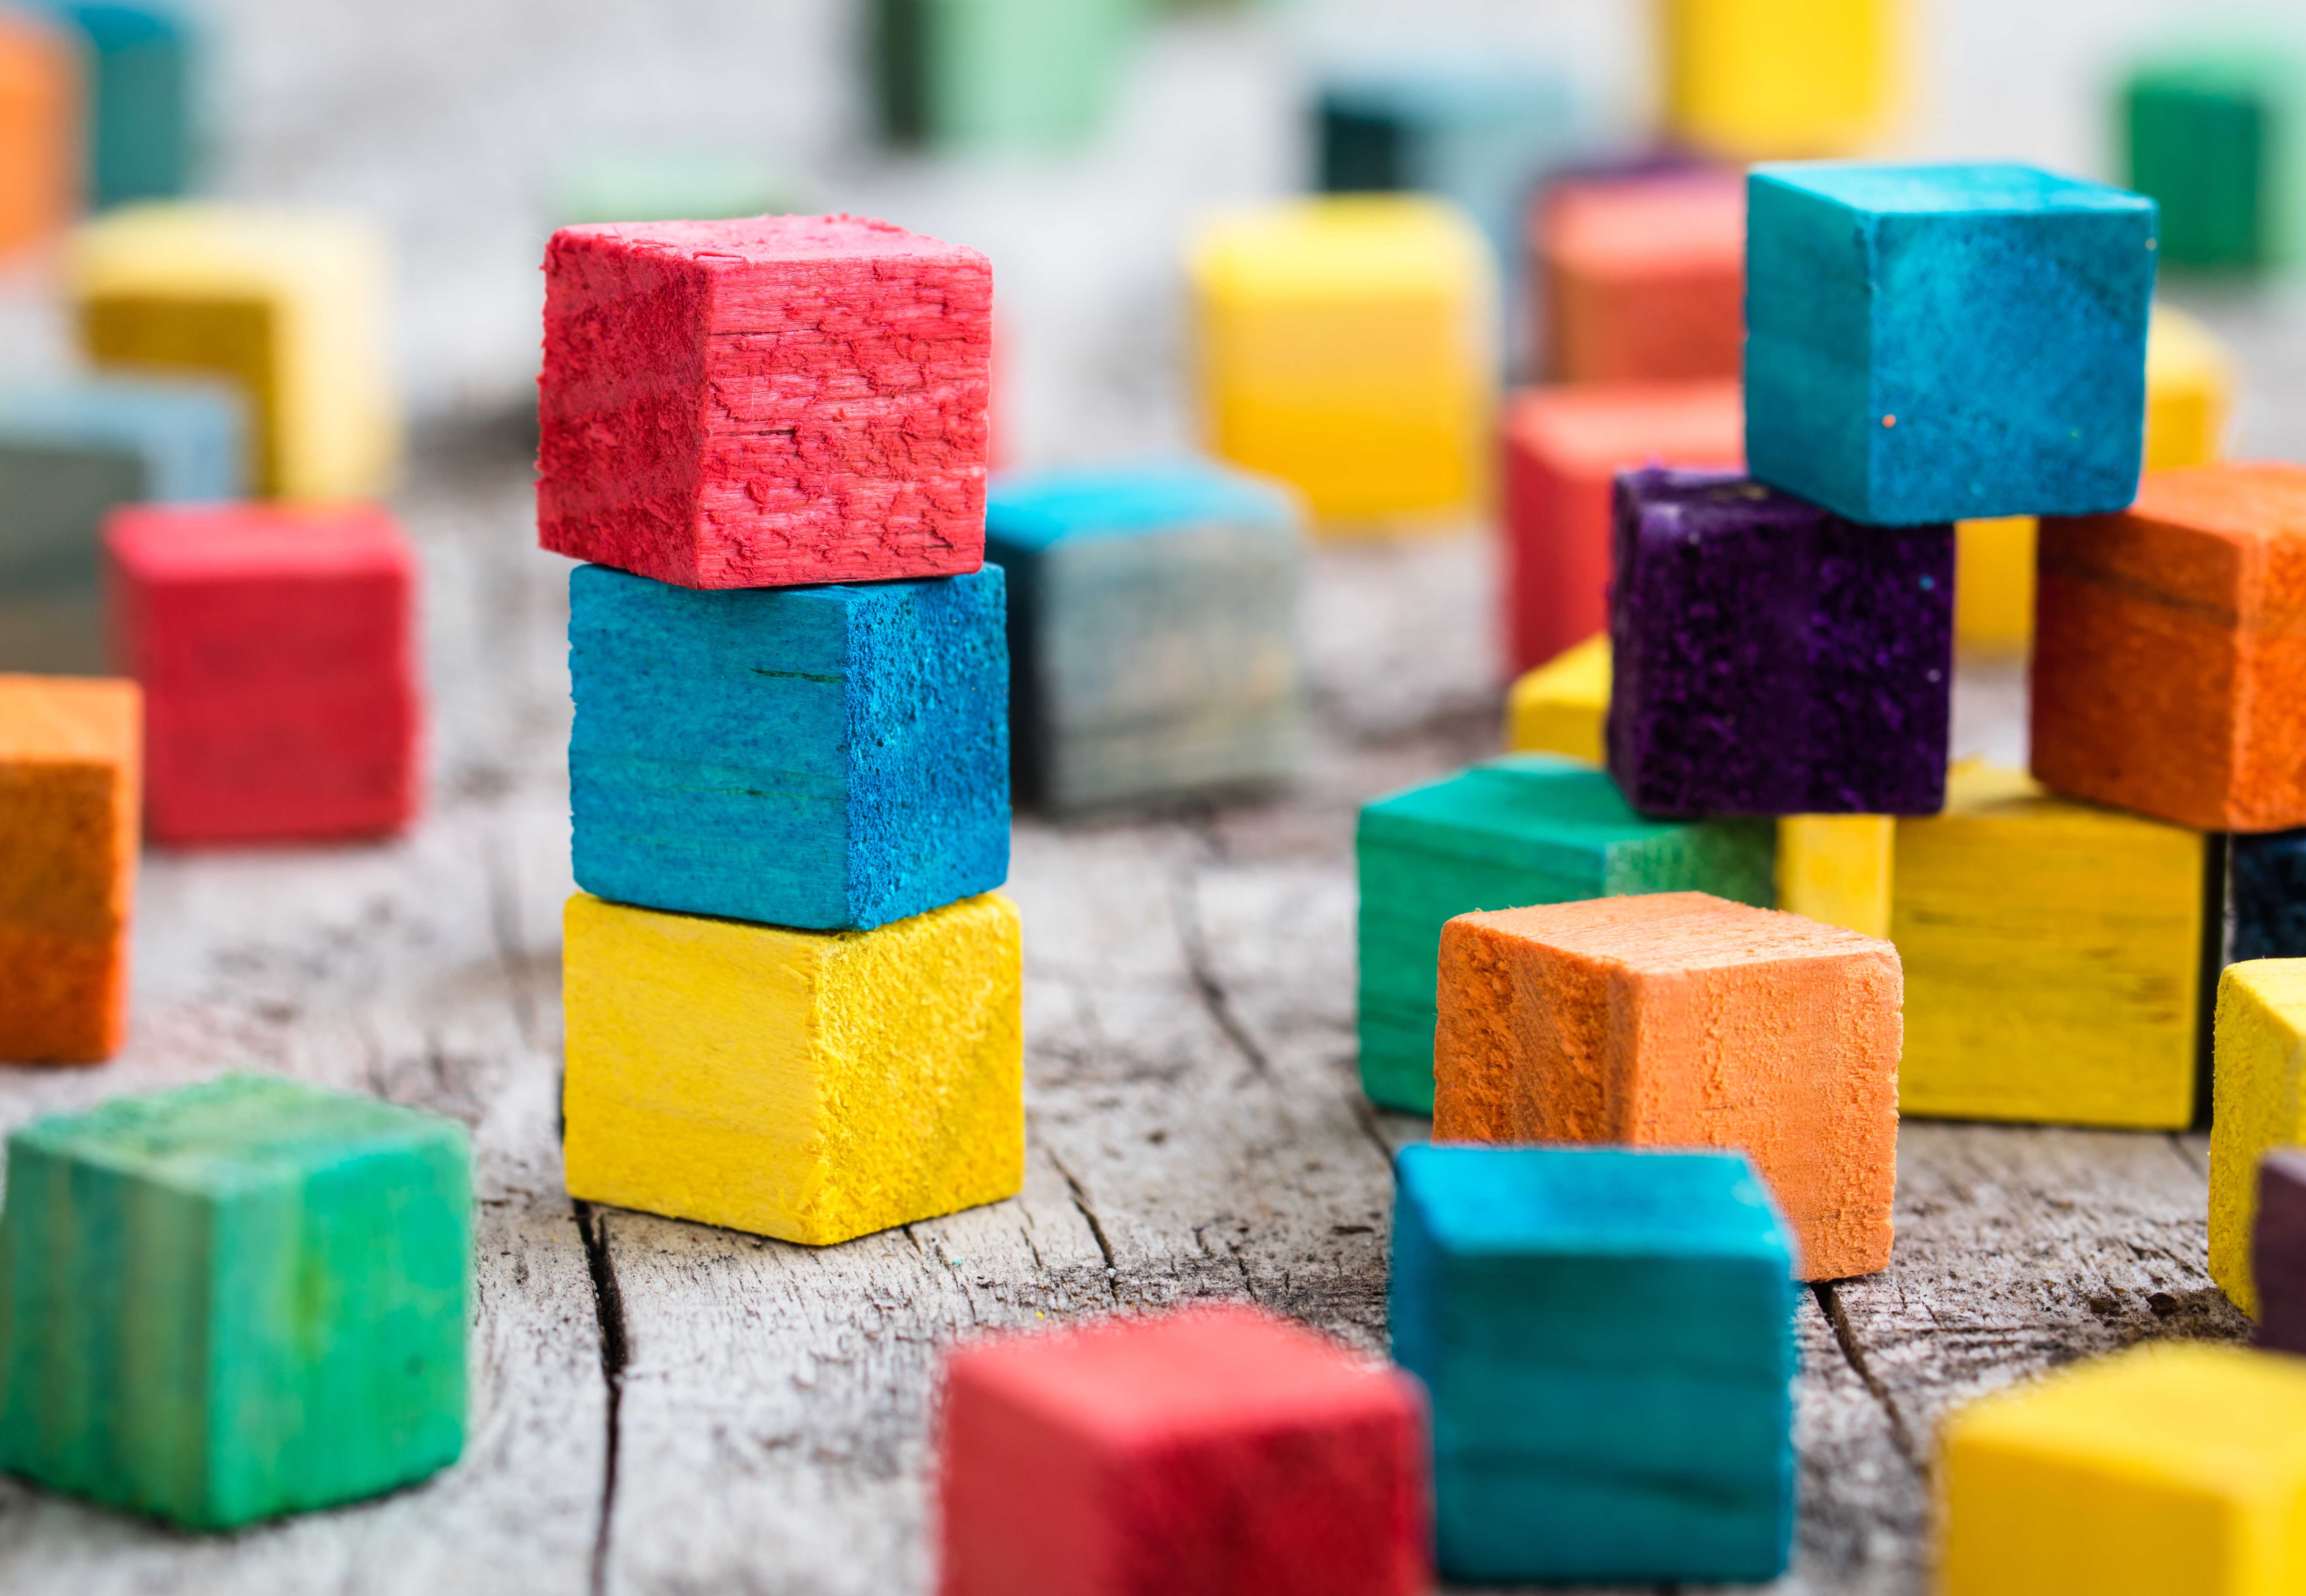 Color cube. Кубики цветные. Разноцветные кубики. Детские кубики. Цветные кубики для детей.